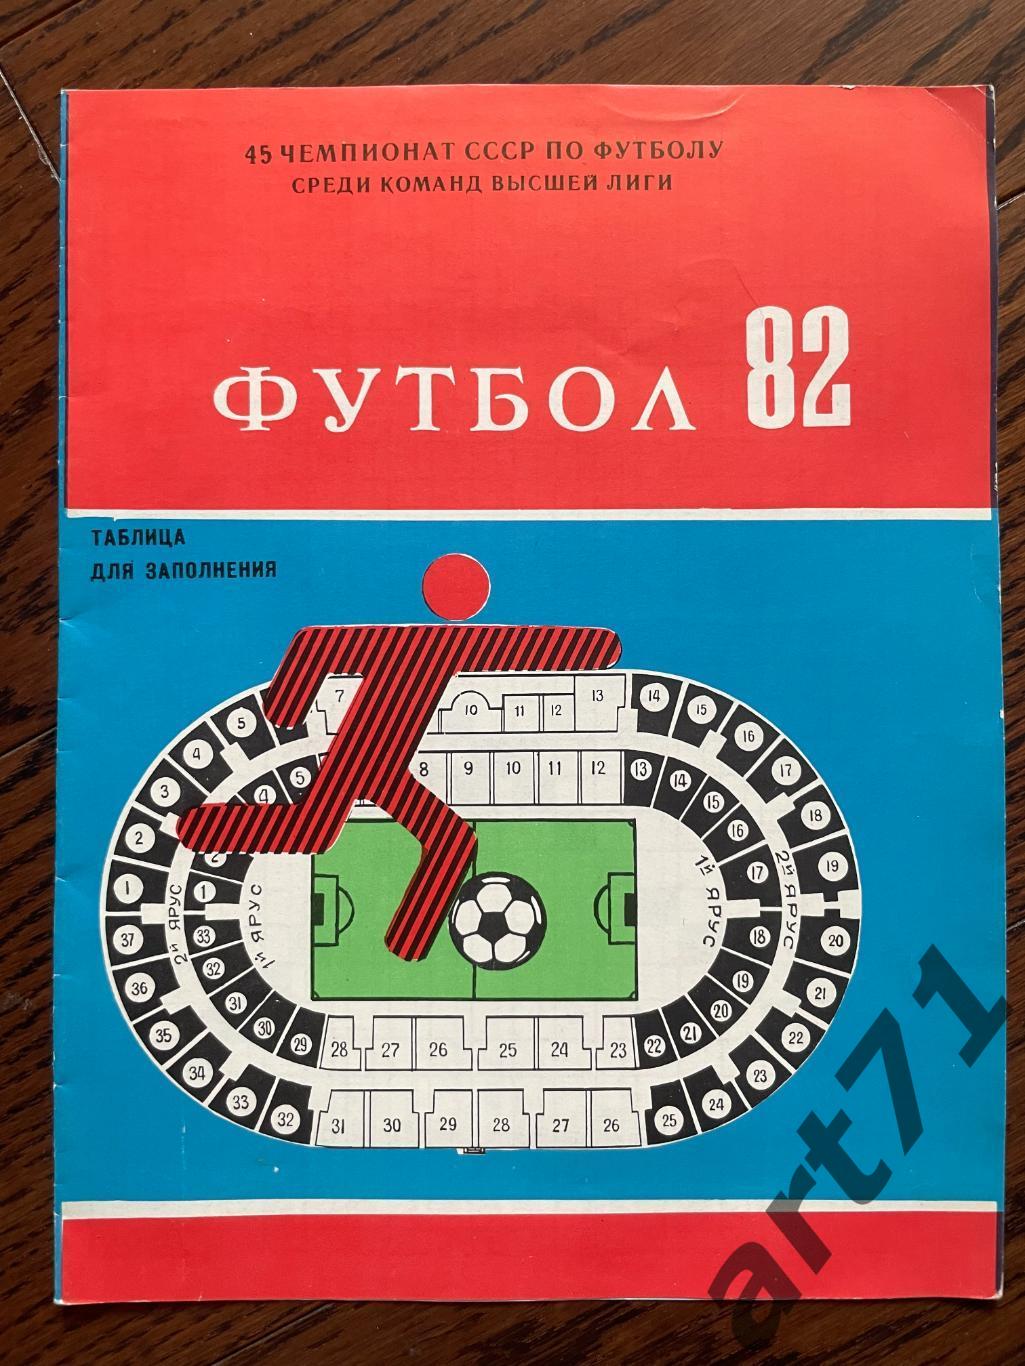 Донецк 1982. Календарь игр, таблицы